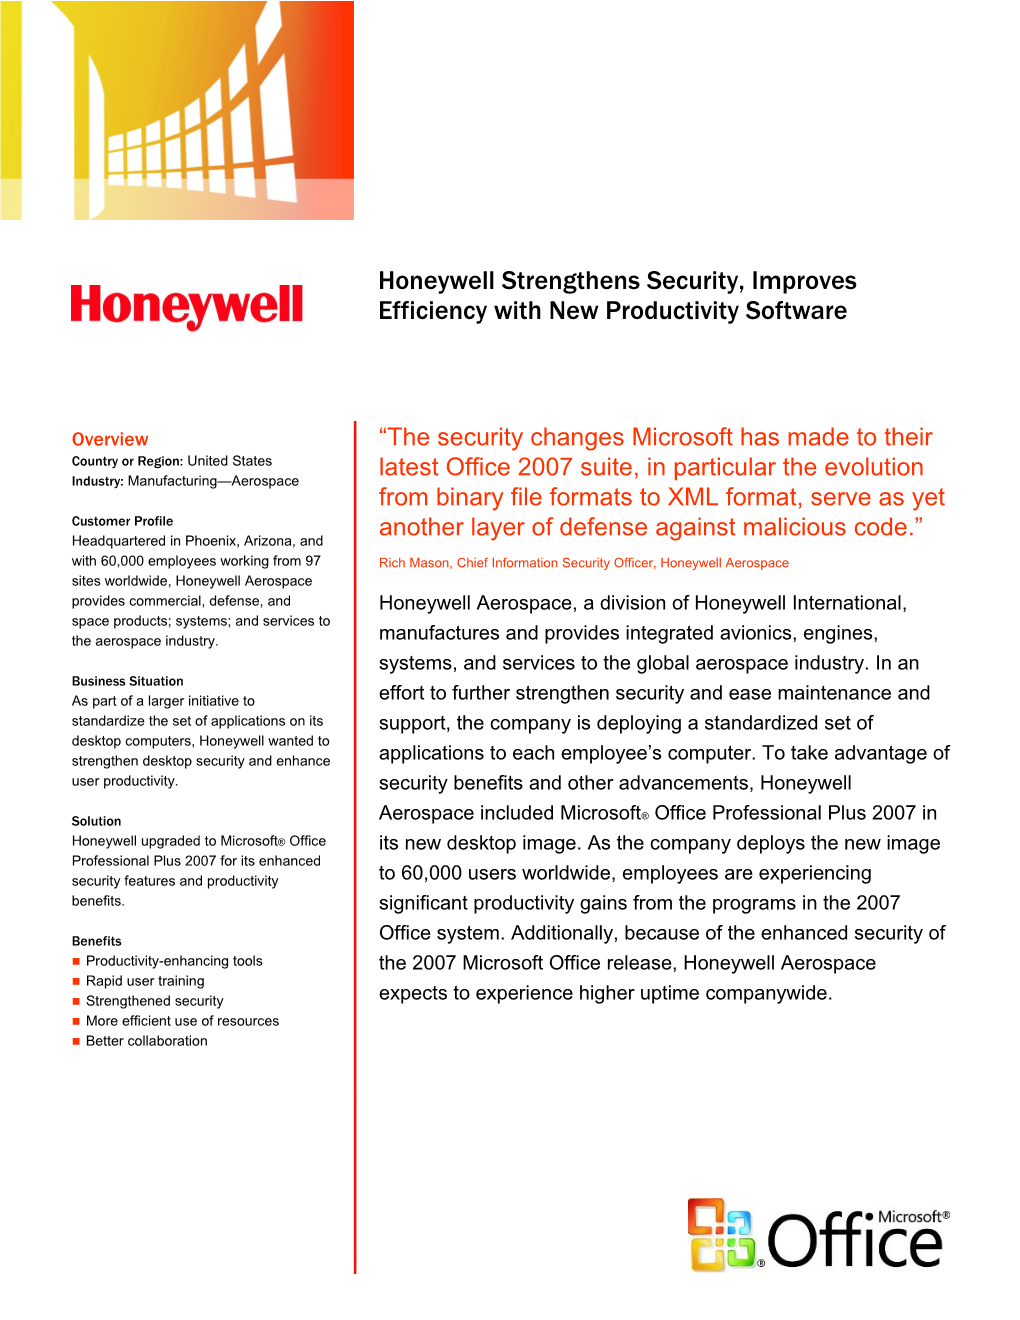 Honeywell Aerospace, a Division of Honeywell International, Manufactures Integrated Avionics